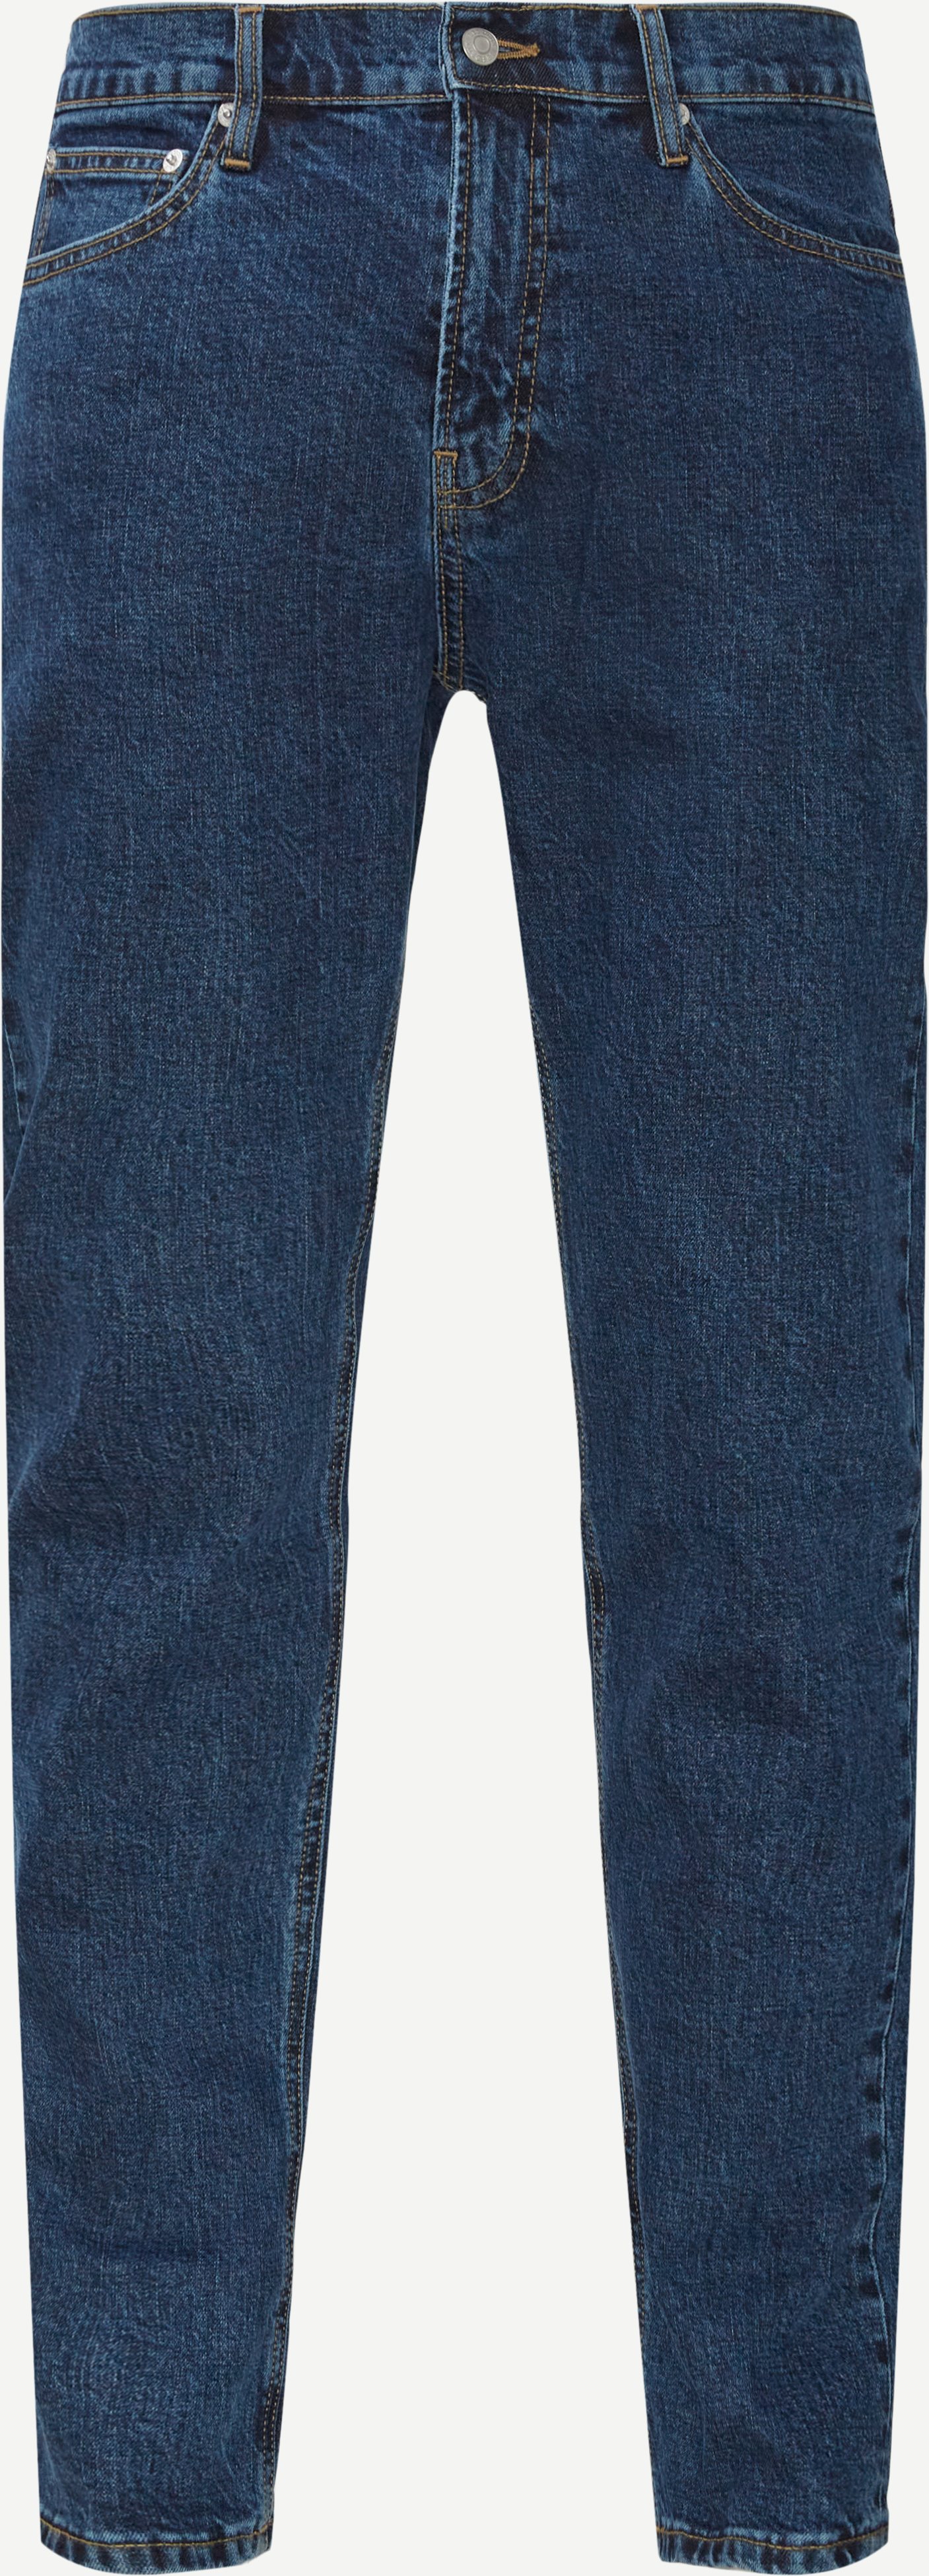 Russell Jeans - Jeans - Regular fit - Denim